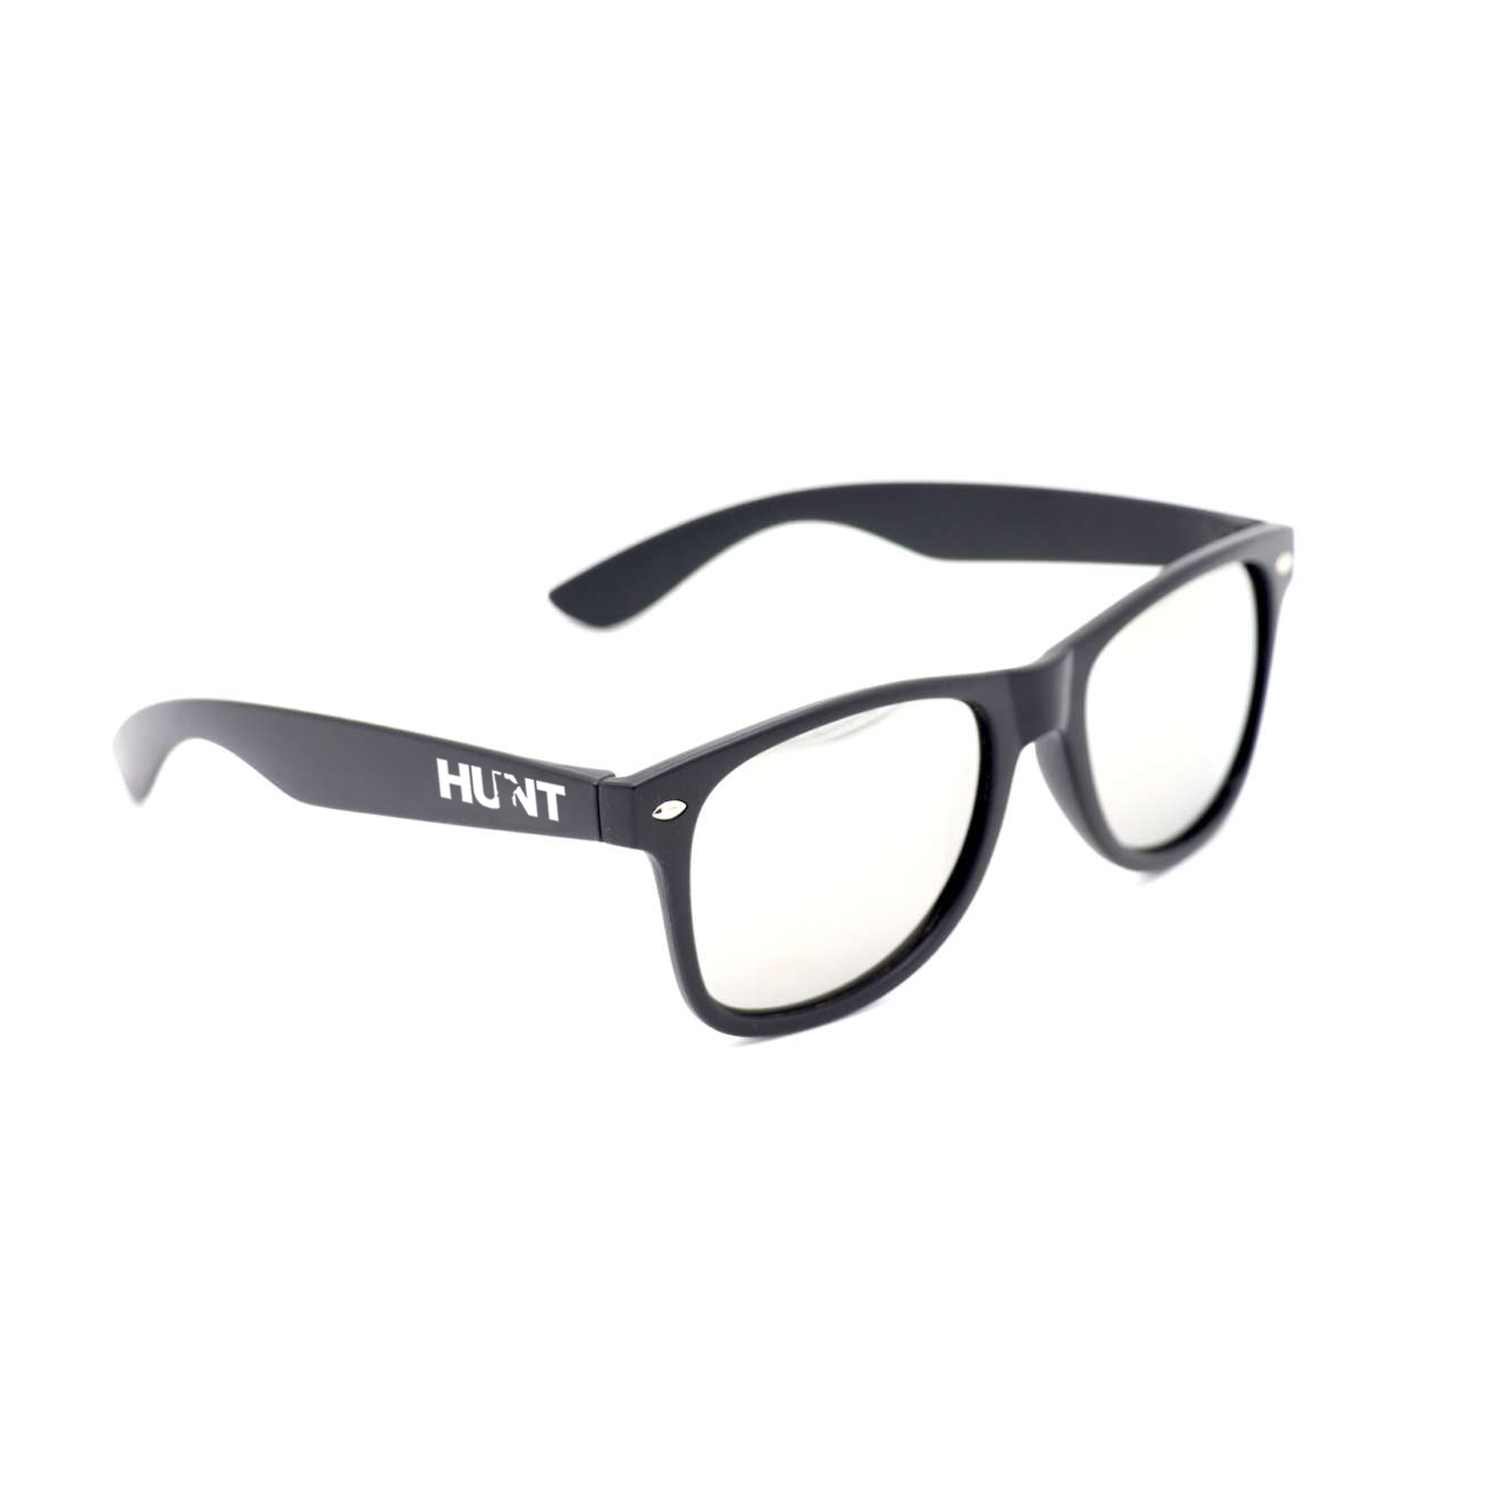 Hunt Minnesota Classic Sunglasses Black